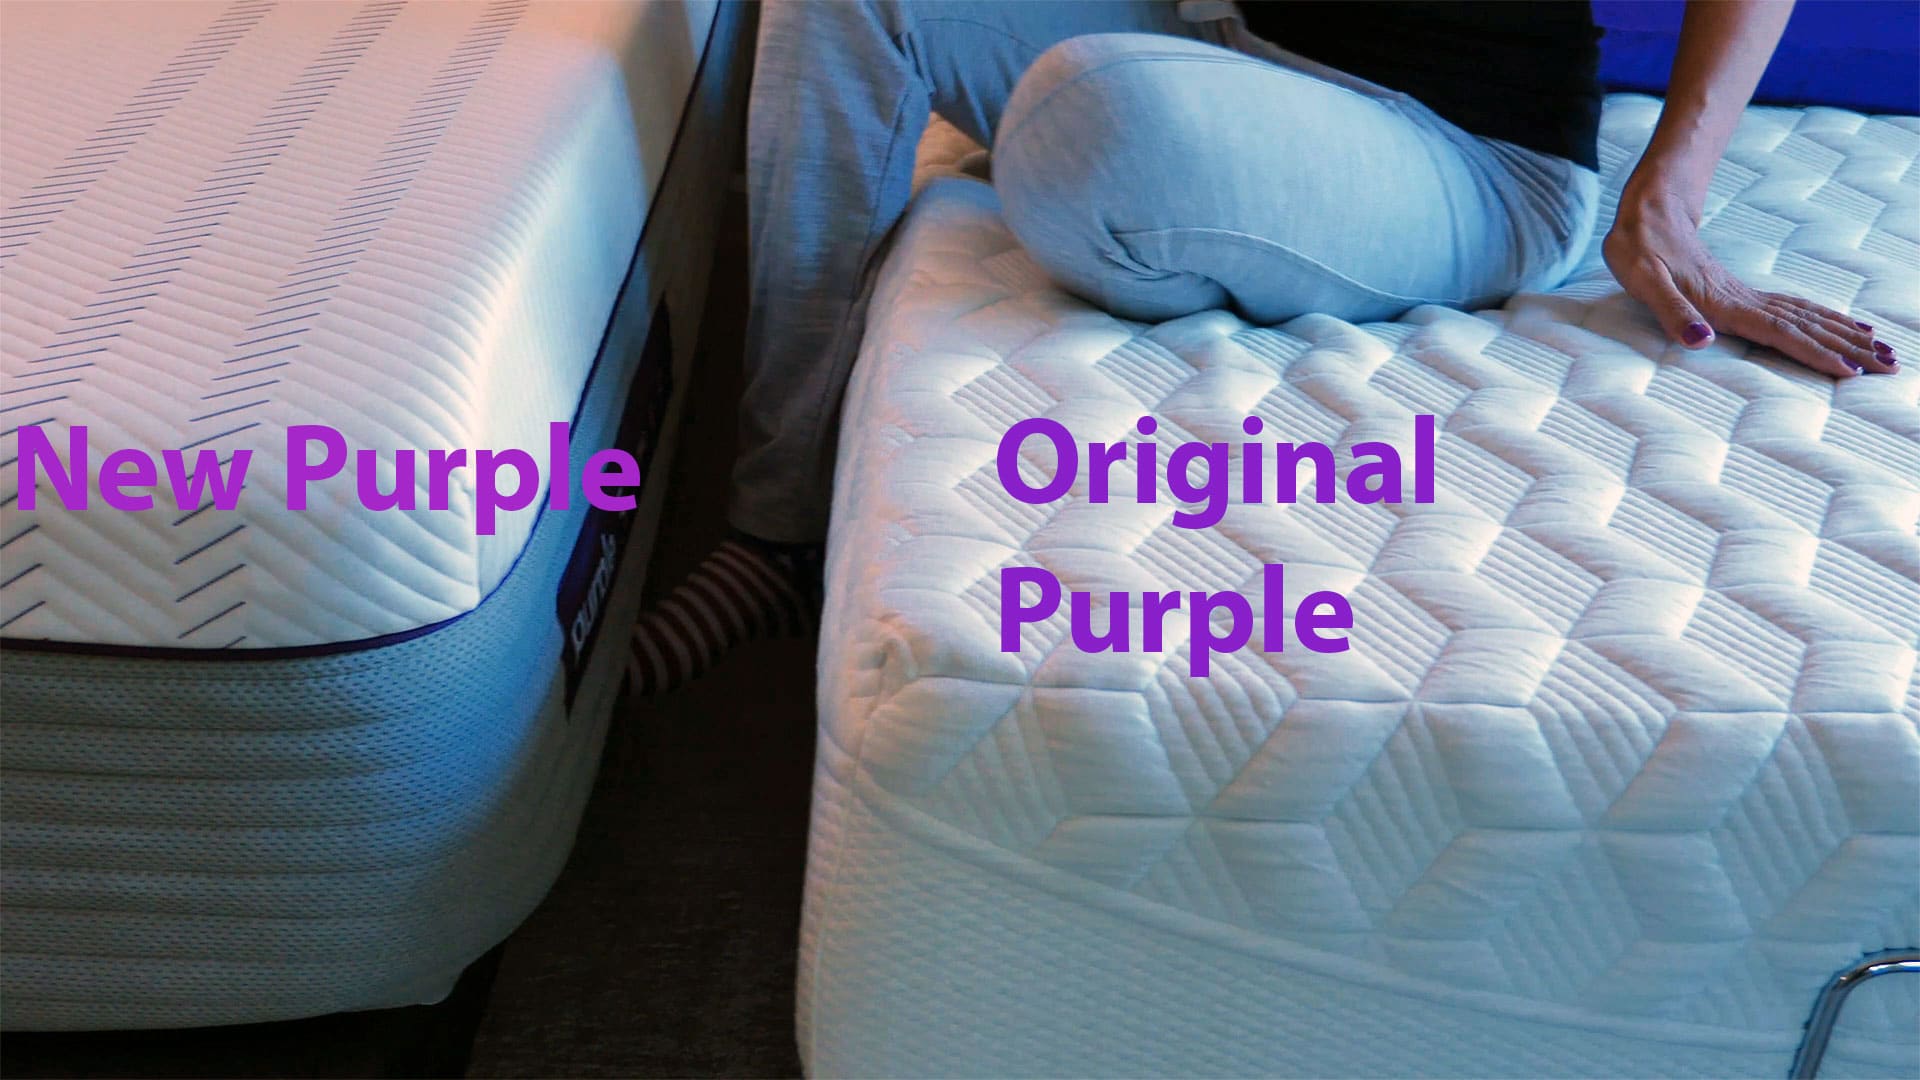 facebook marketplace purple mattress